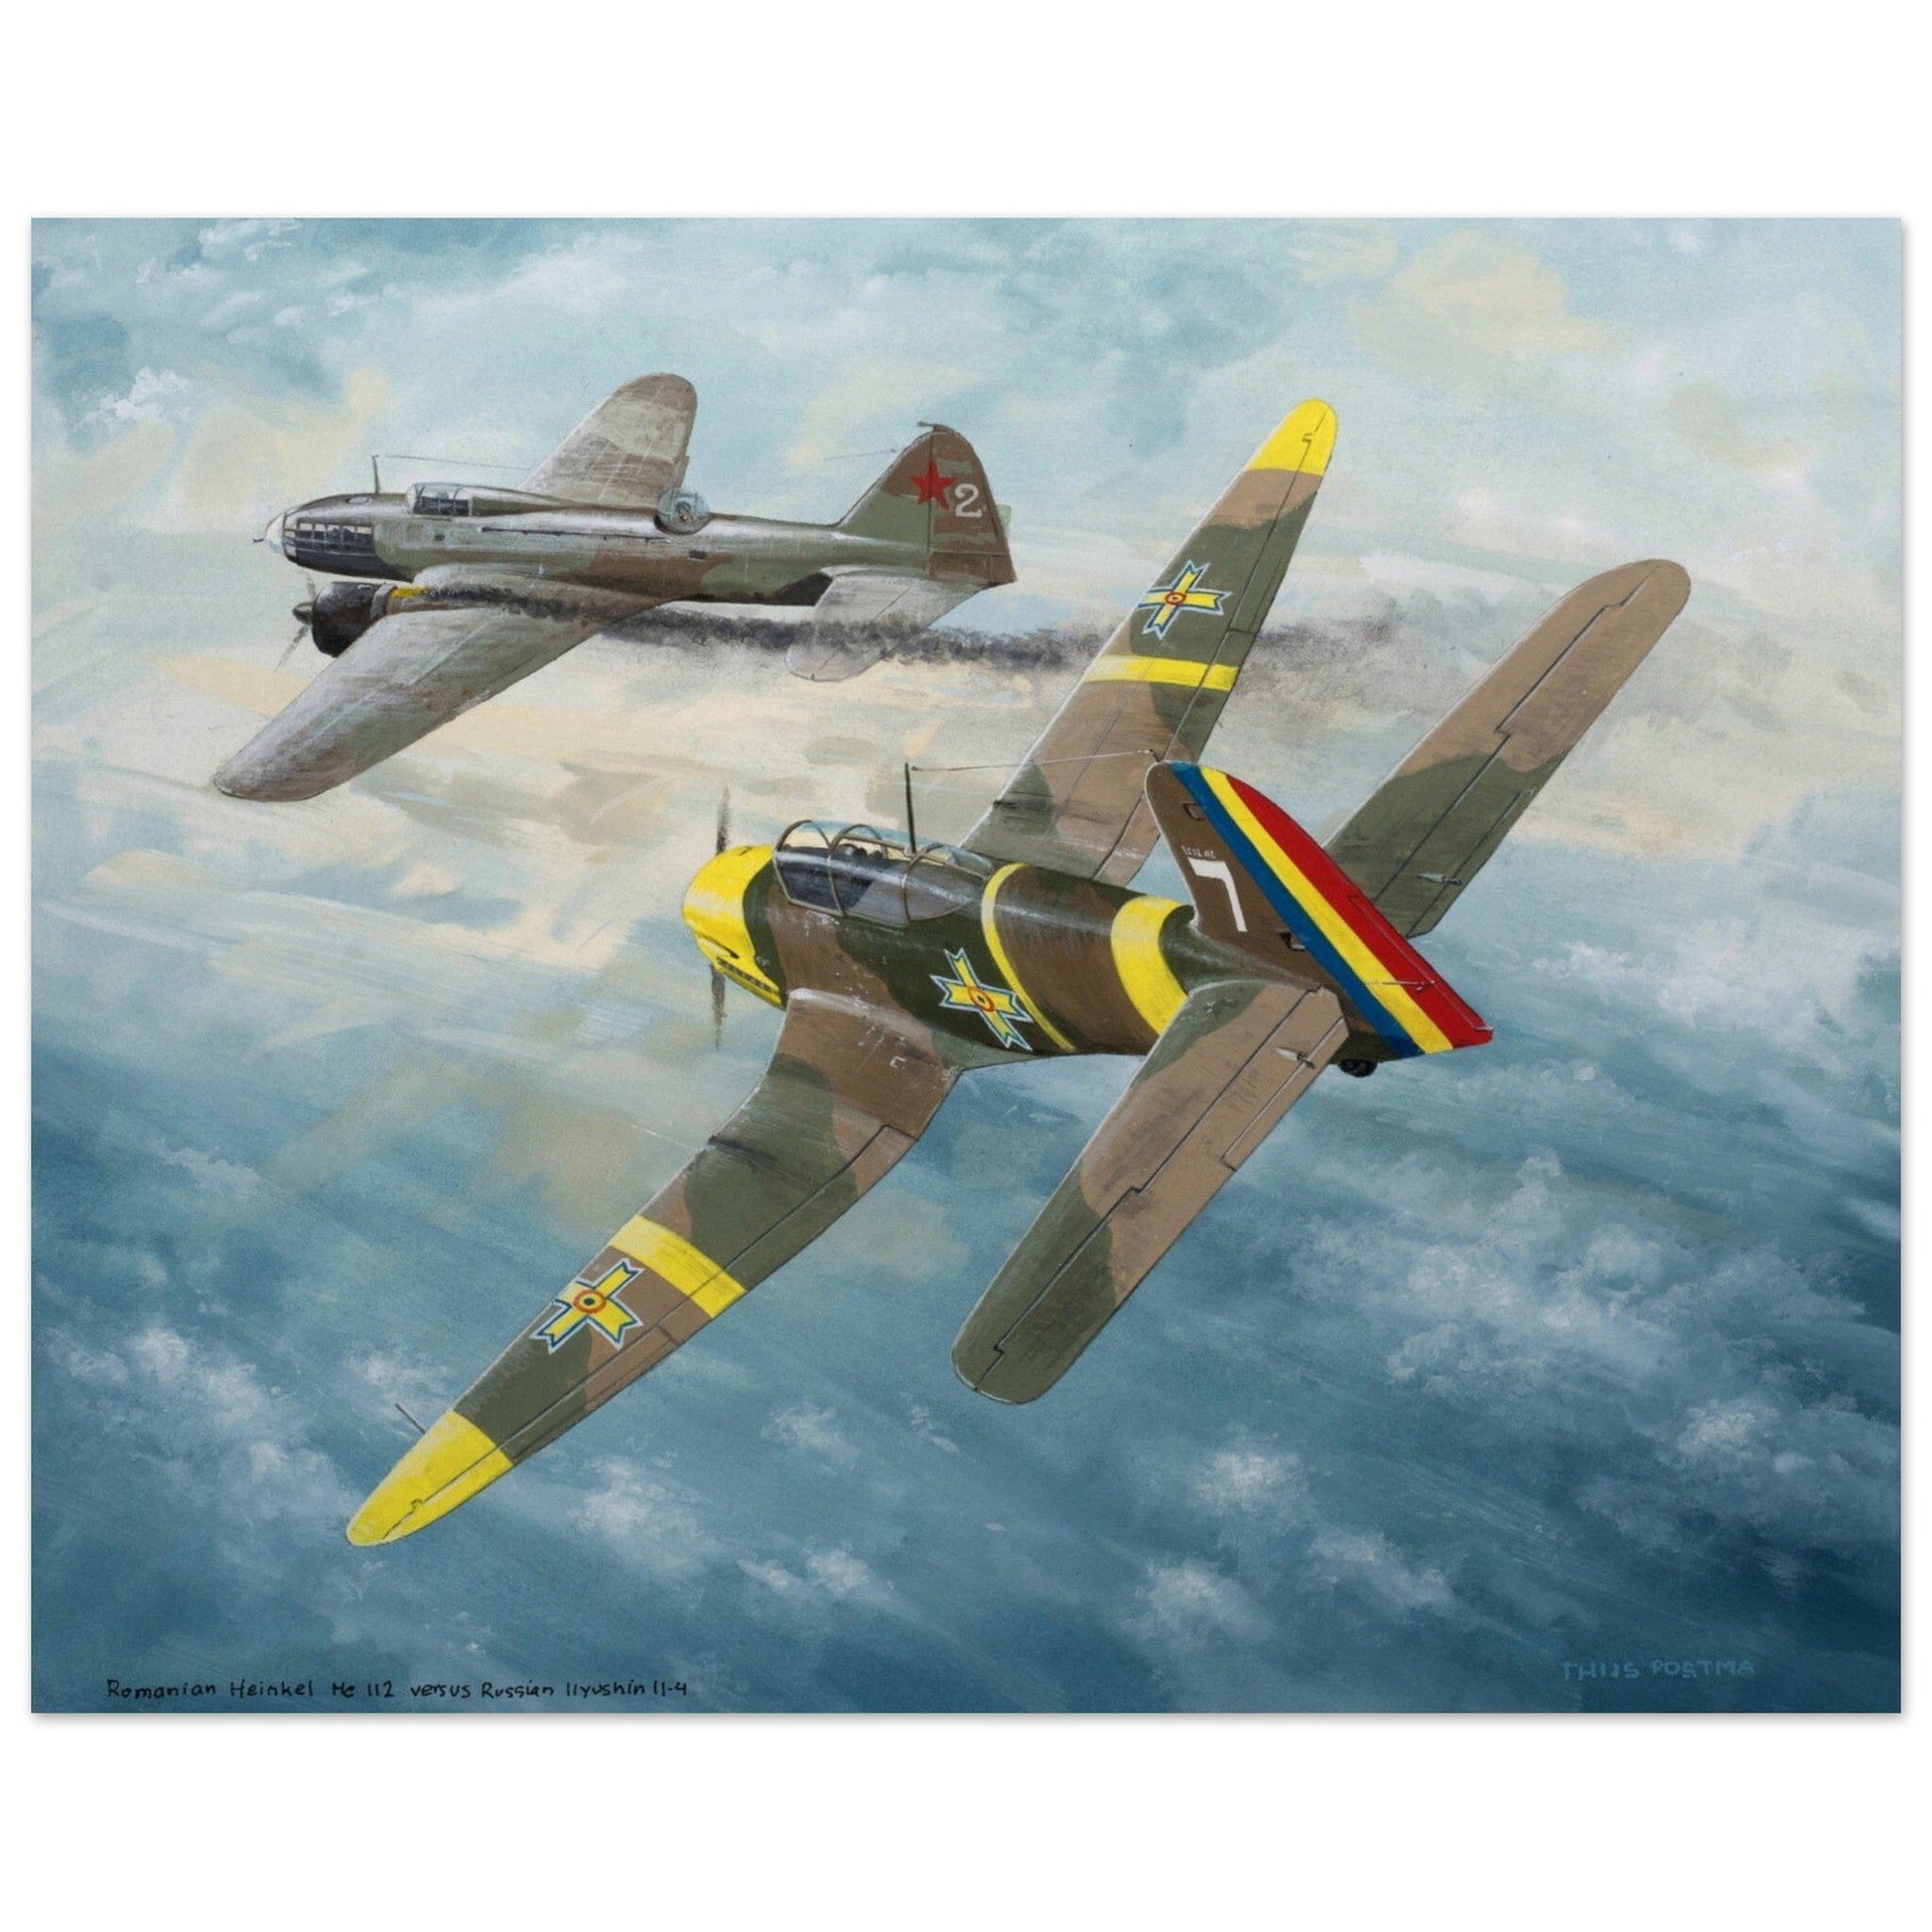 Thijs Postma - Poster - Romanian Heinkel He 112 Attacks Russian Ilyushin Il-4 Poster Only TP Aviation Art 40x50 cm / 16x20″ 